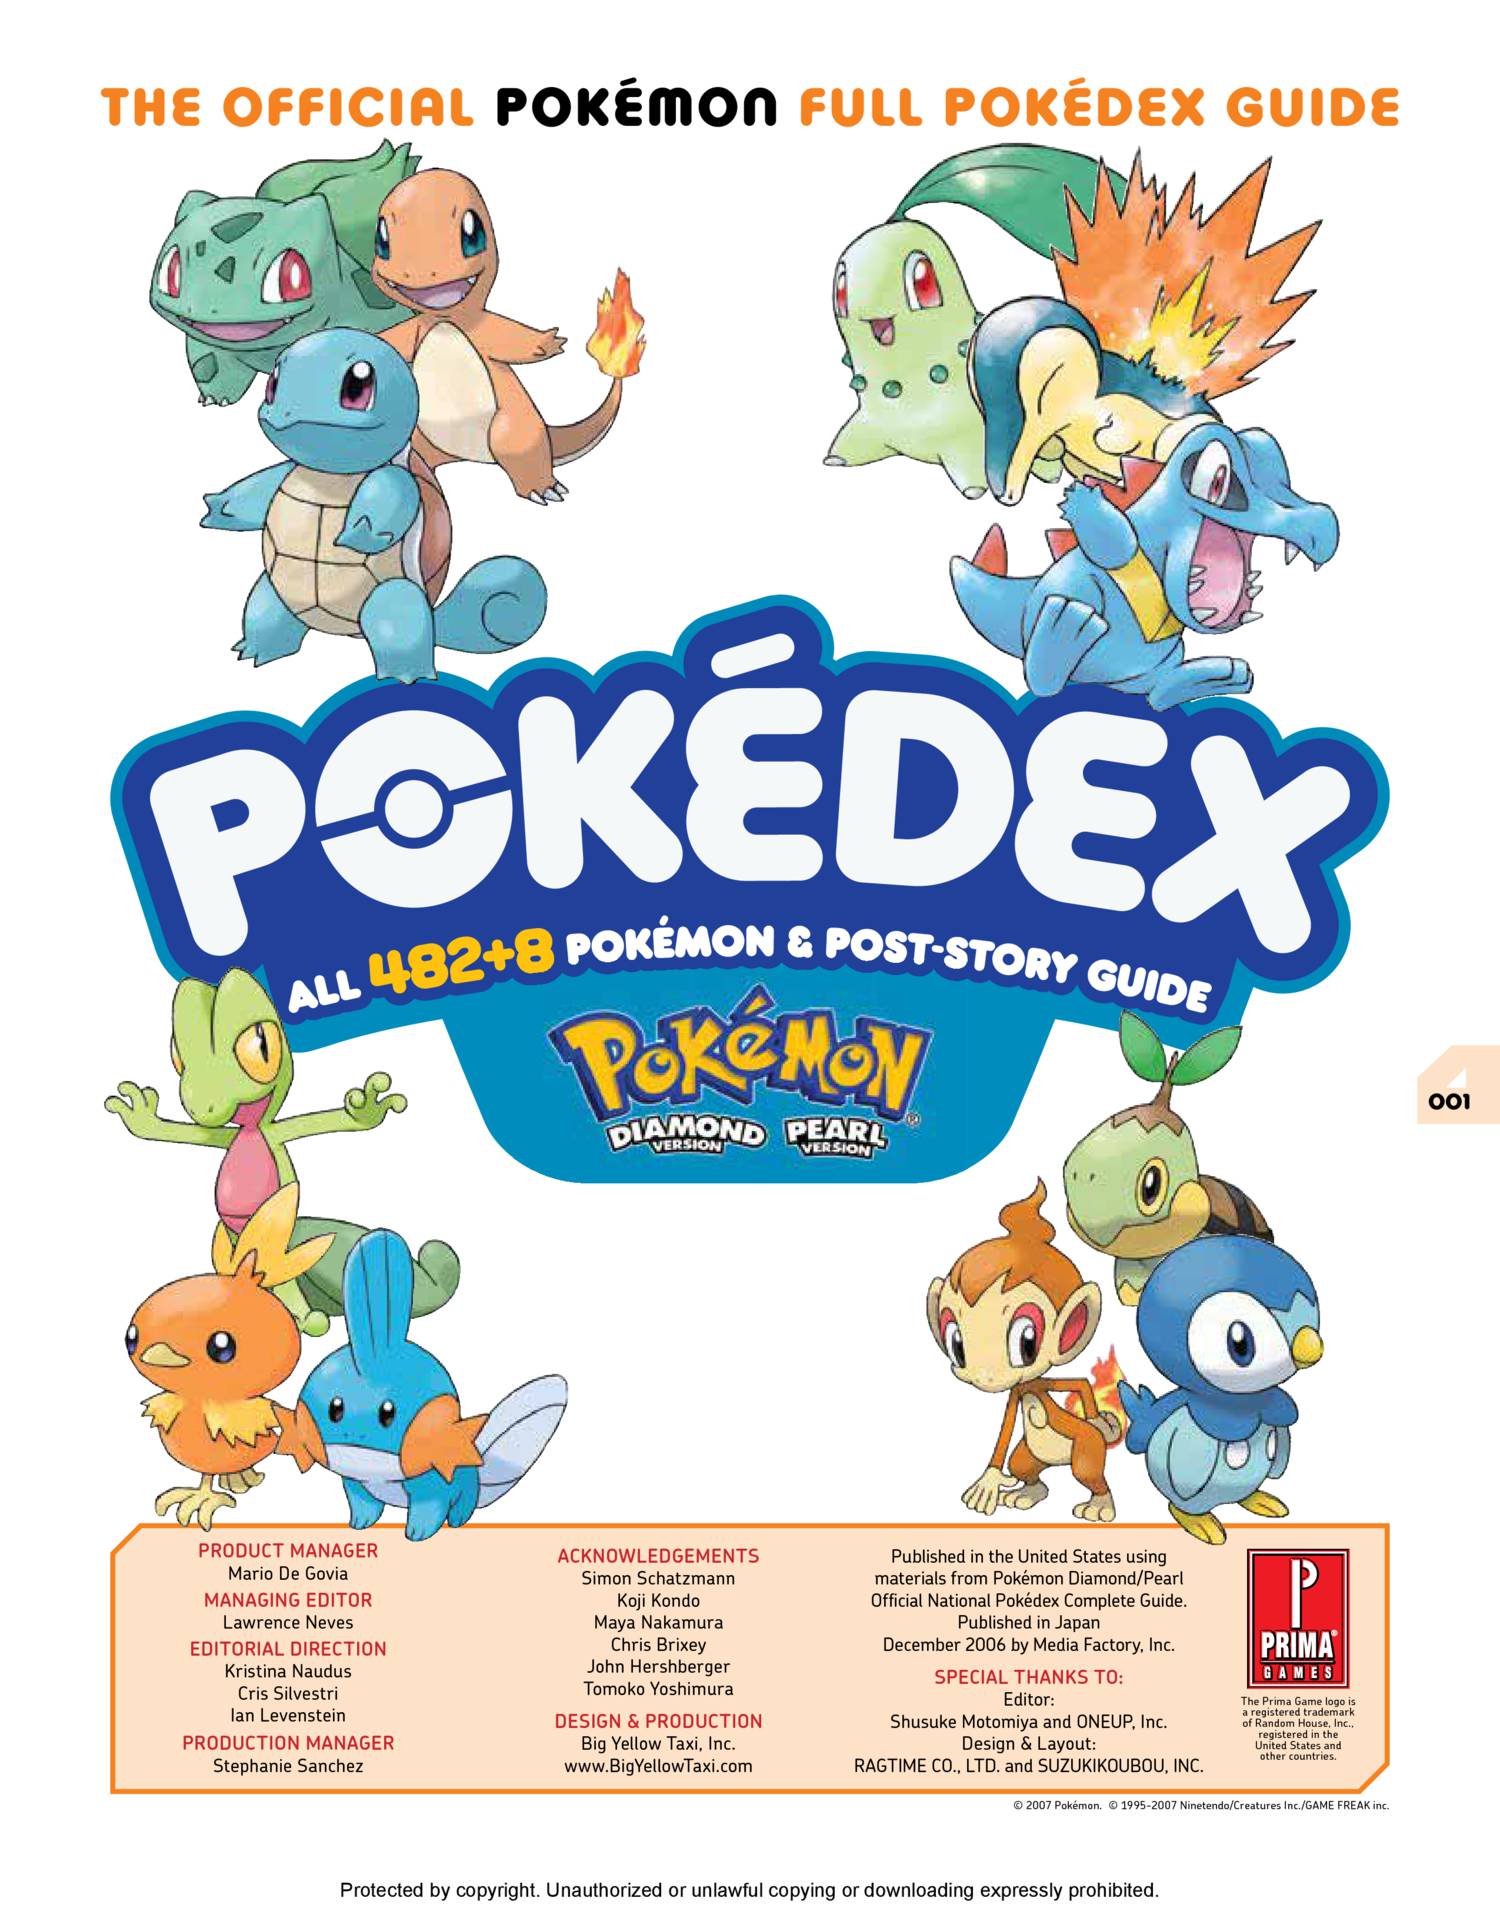 Prima 2010) - Pokemon Heartgold & SoulSilver - Pocket Pokedex Vol 3 .pdf